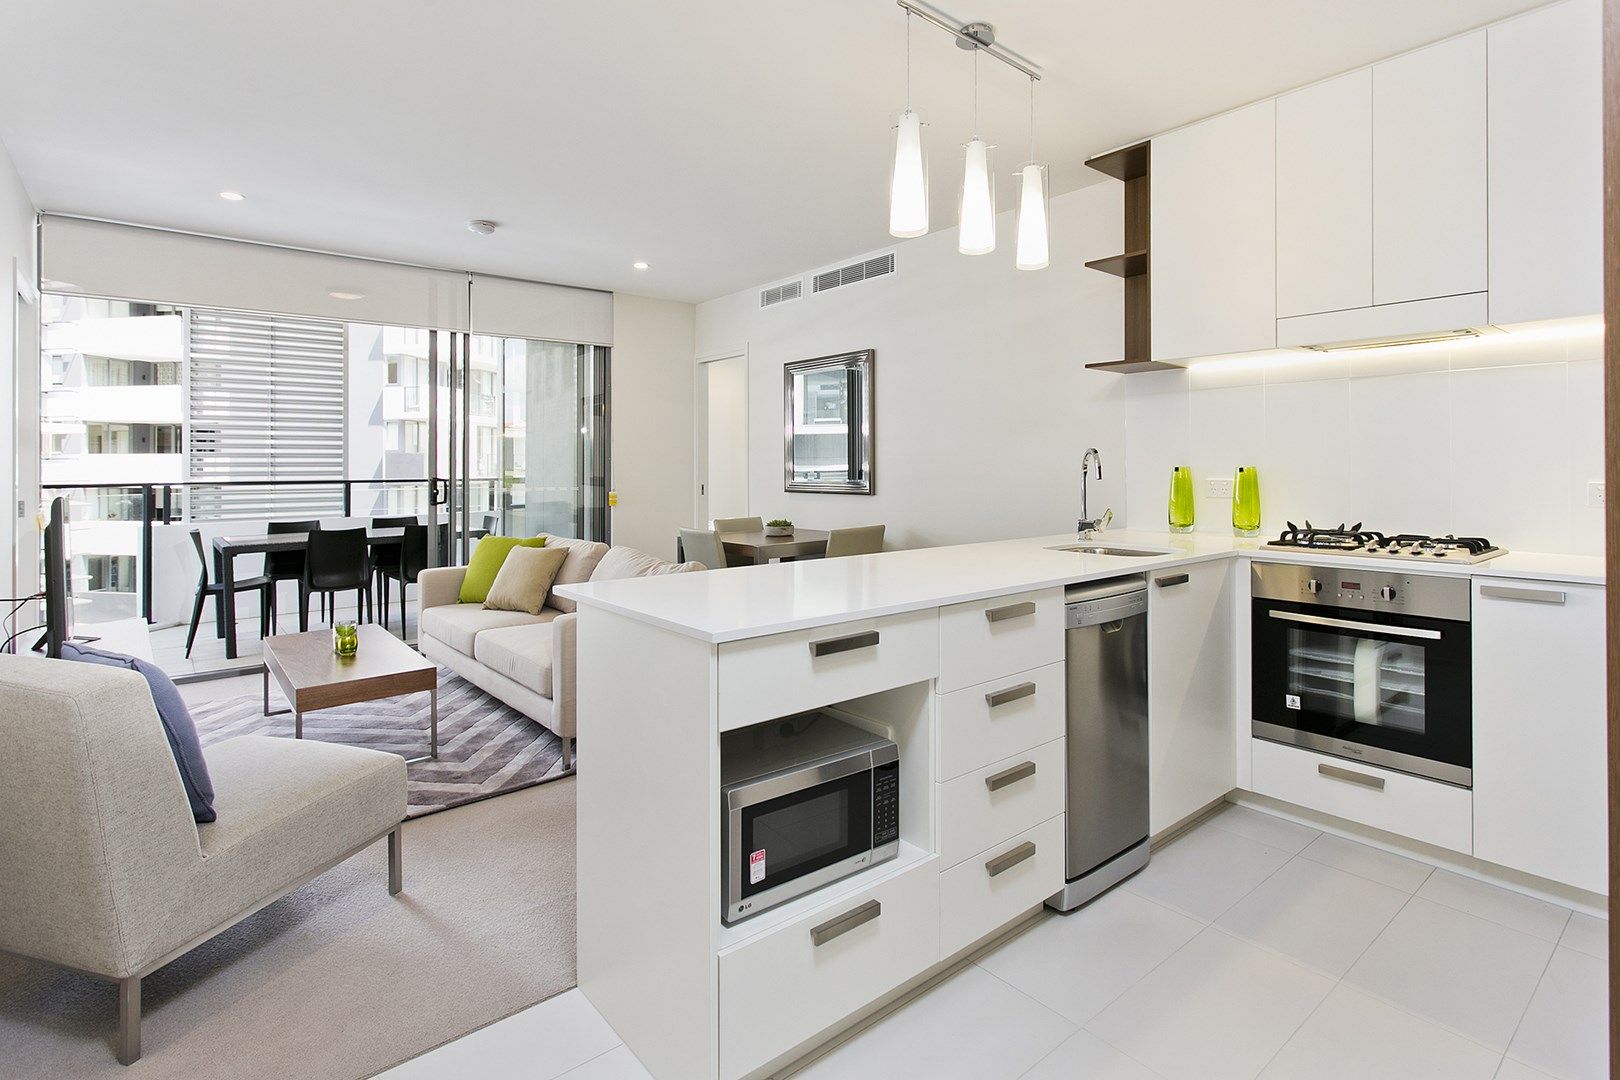 2 bedrooms Apartment / Unit / Flat in 901/16 Aspinall Street NUNDAH QLD, 4012